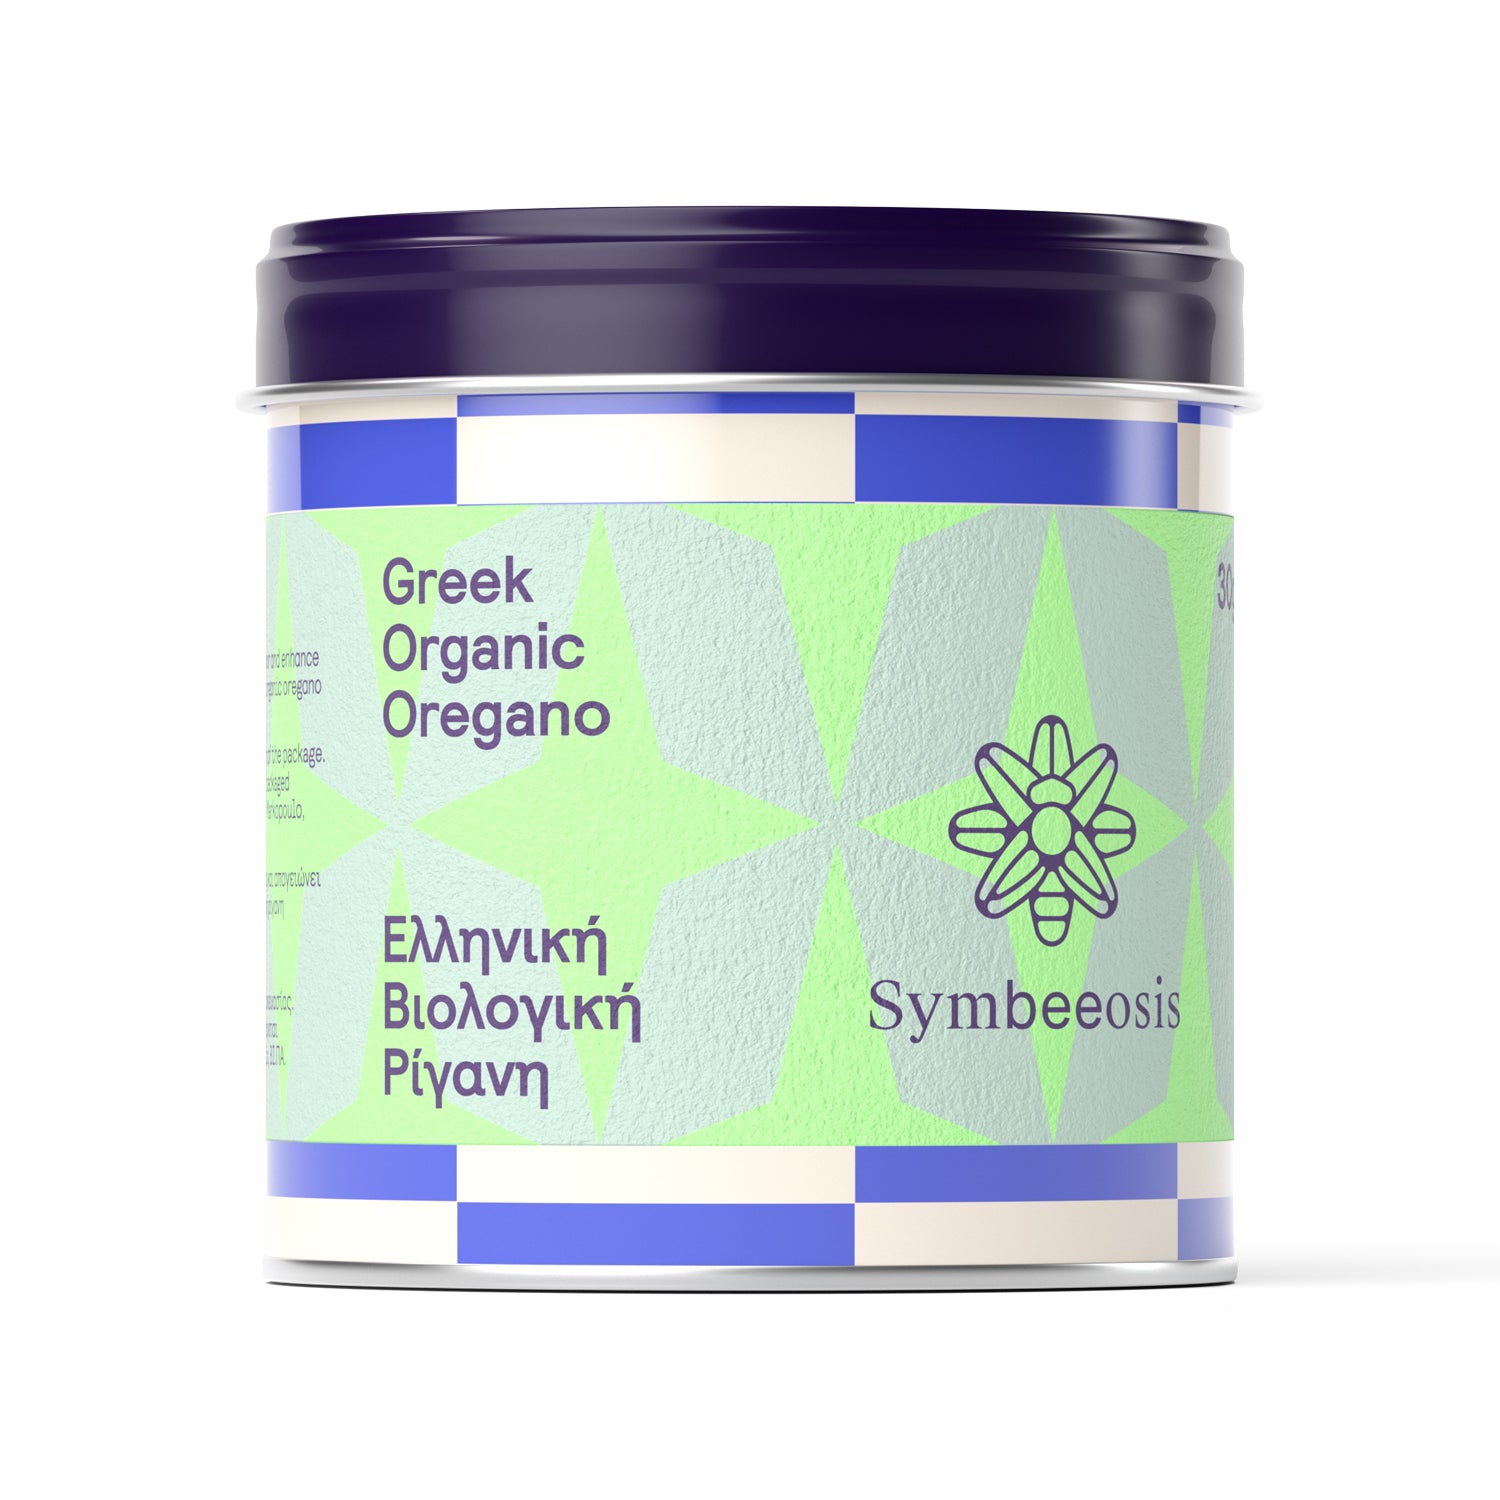 Origano greco Bio - 30g - Symbeeosis